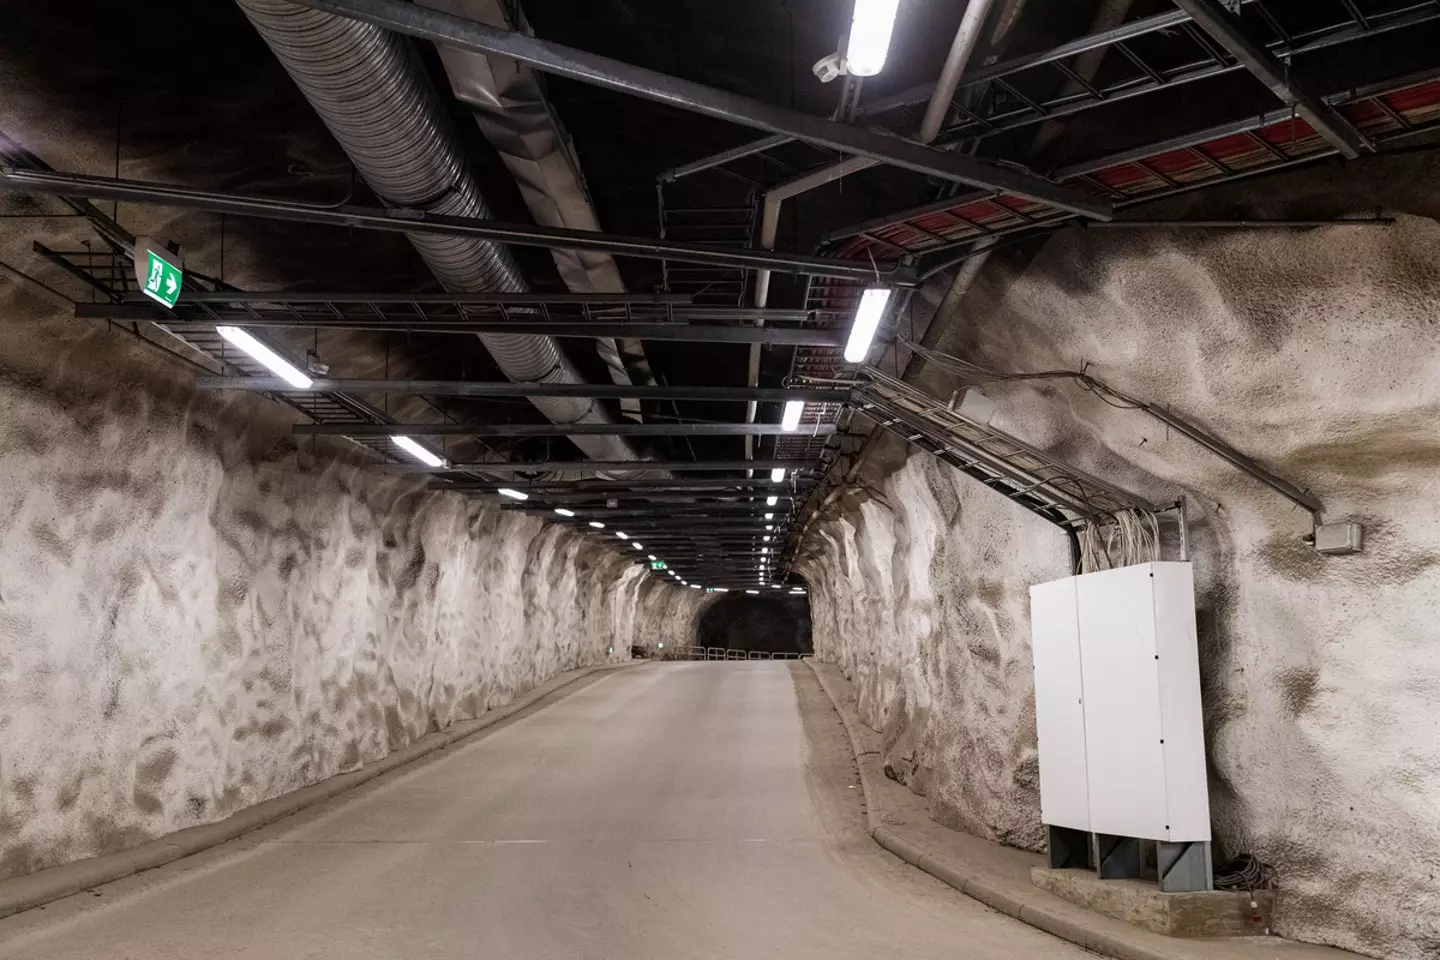 The underground city sits 25 metres below ground.